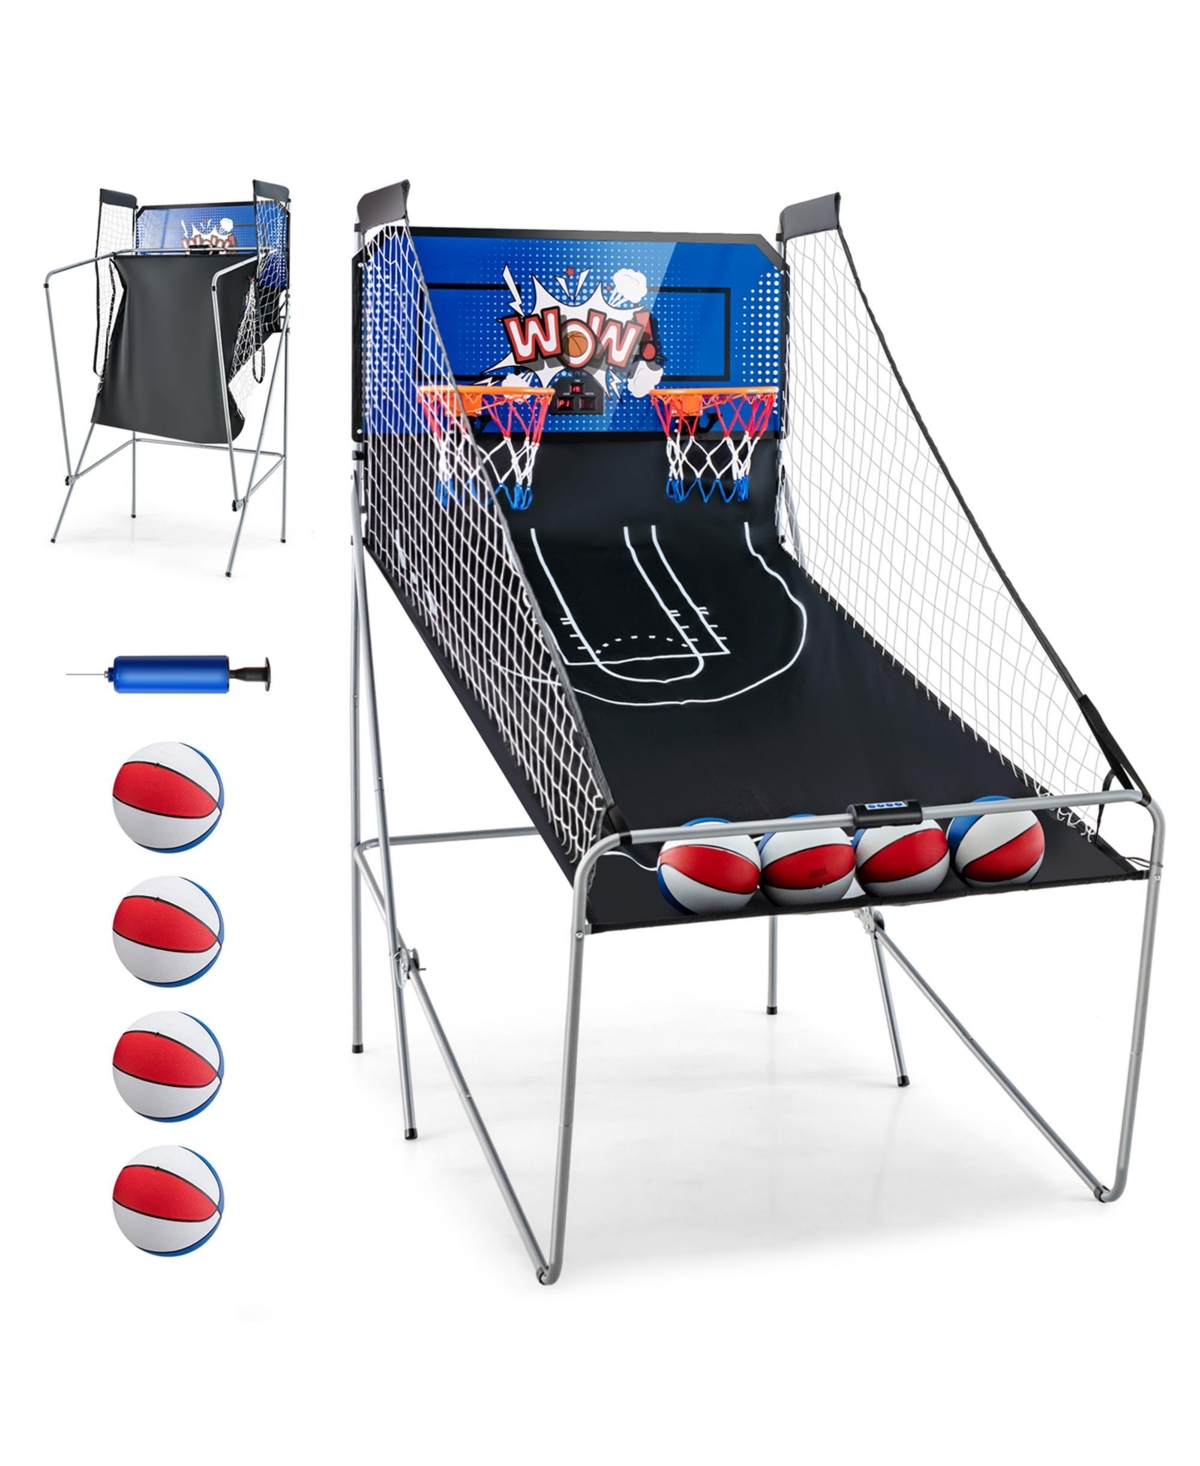 Dual Shot Basketball Arcade Game with 8 Game Modes Arcade Sound Electronic Scoring - Blue